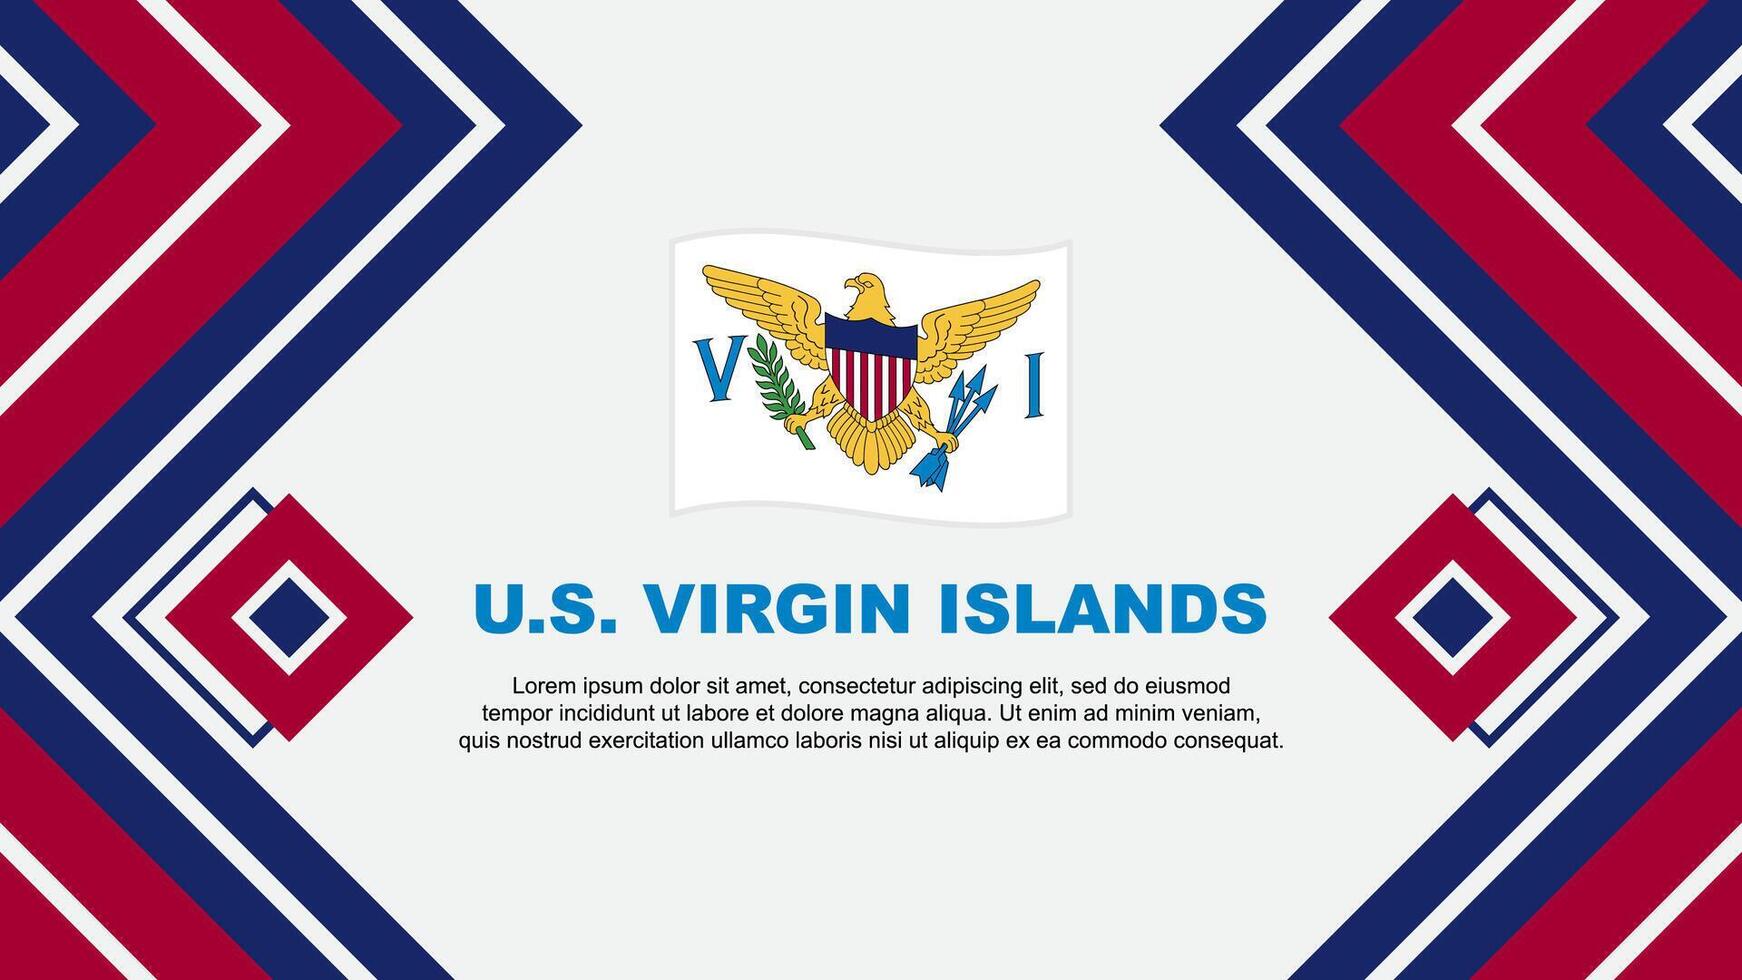 U.S. Virgin Islands Flag Abstract Background Design Template. U.S. Virgin Islands Independence Day Banner Wallpaper Vector Illustration. U.S. Virgin Islands Design